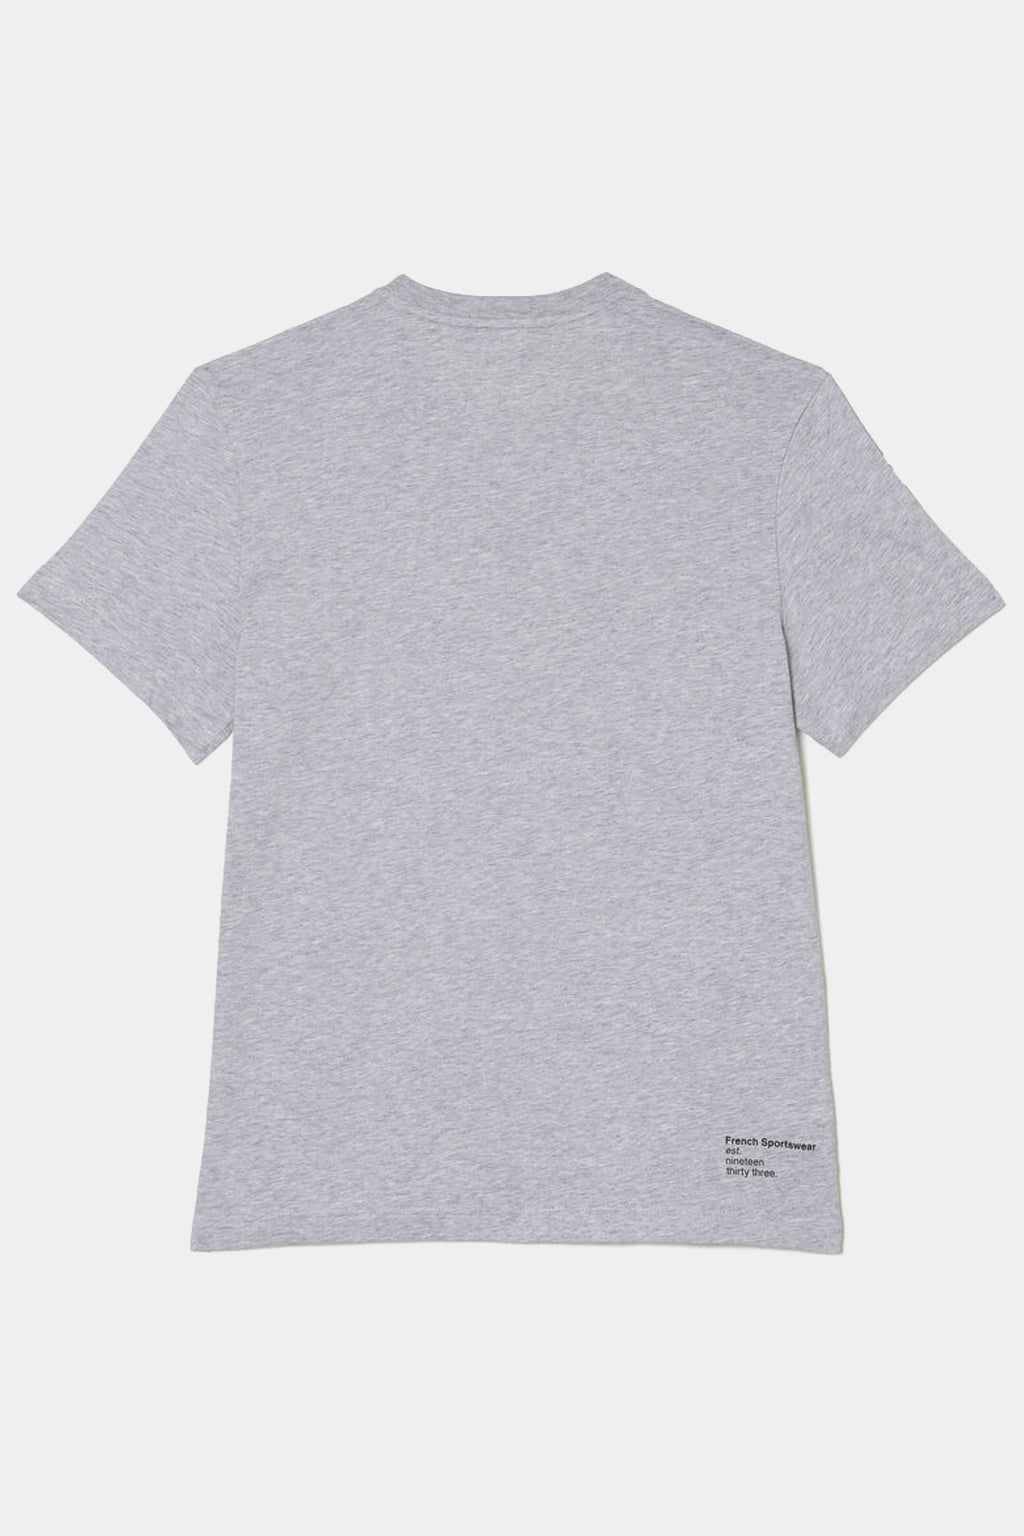 Lacoste - Regular Fit Cotton Jersey T-shirt